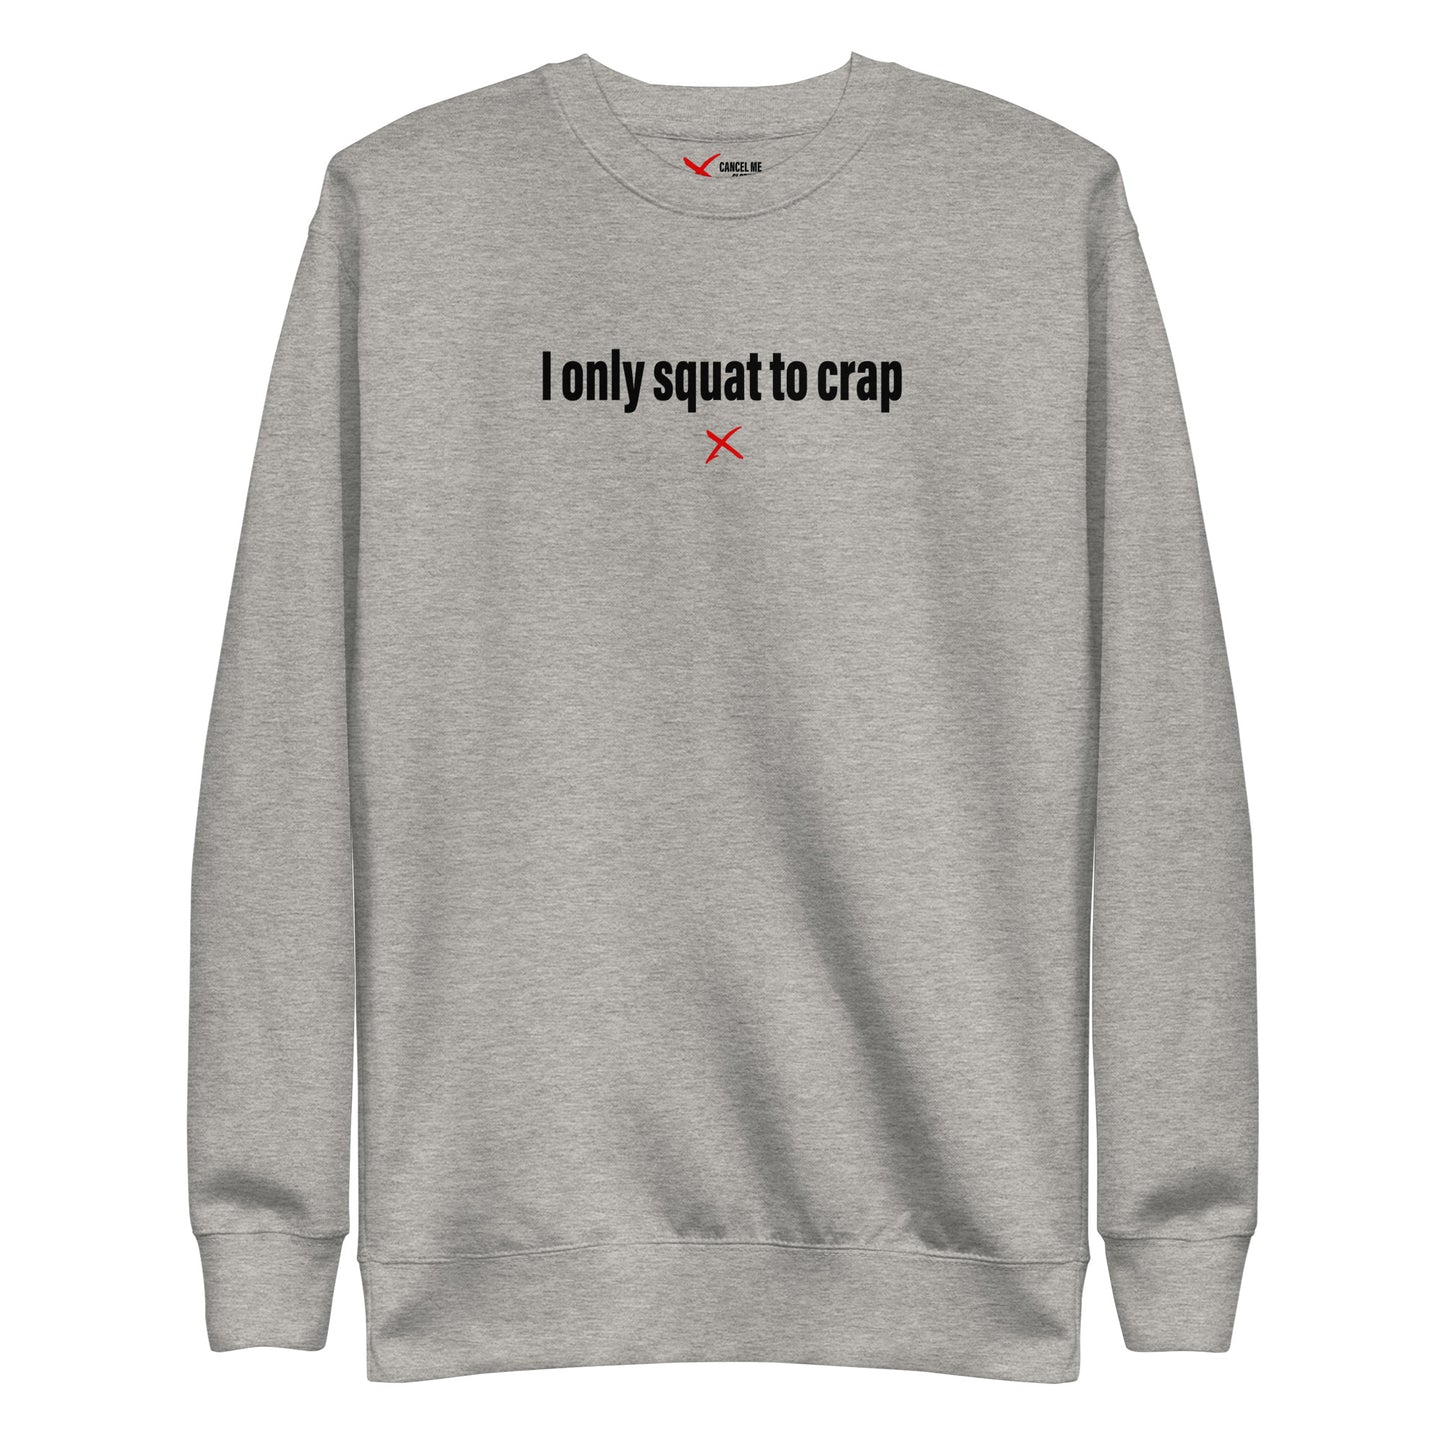 I only squat to crap - Sweatshirt